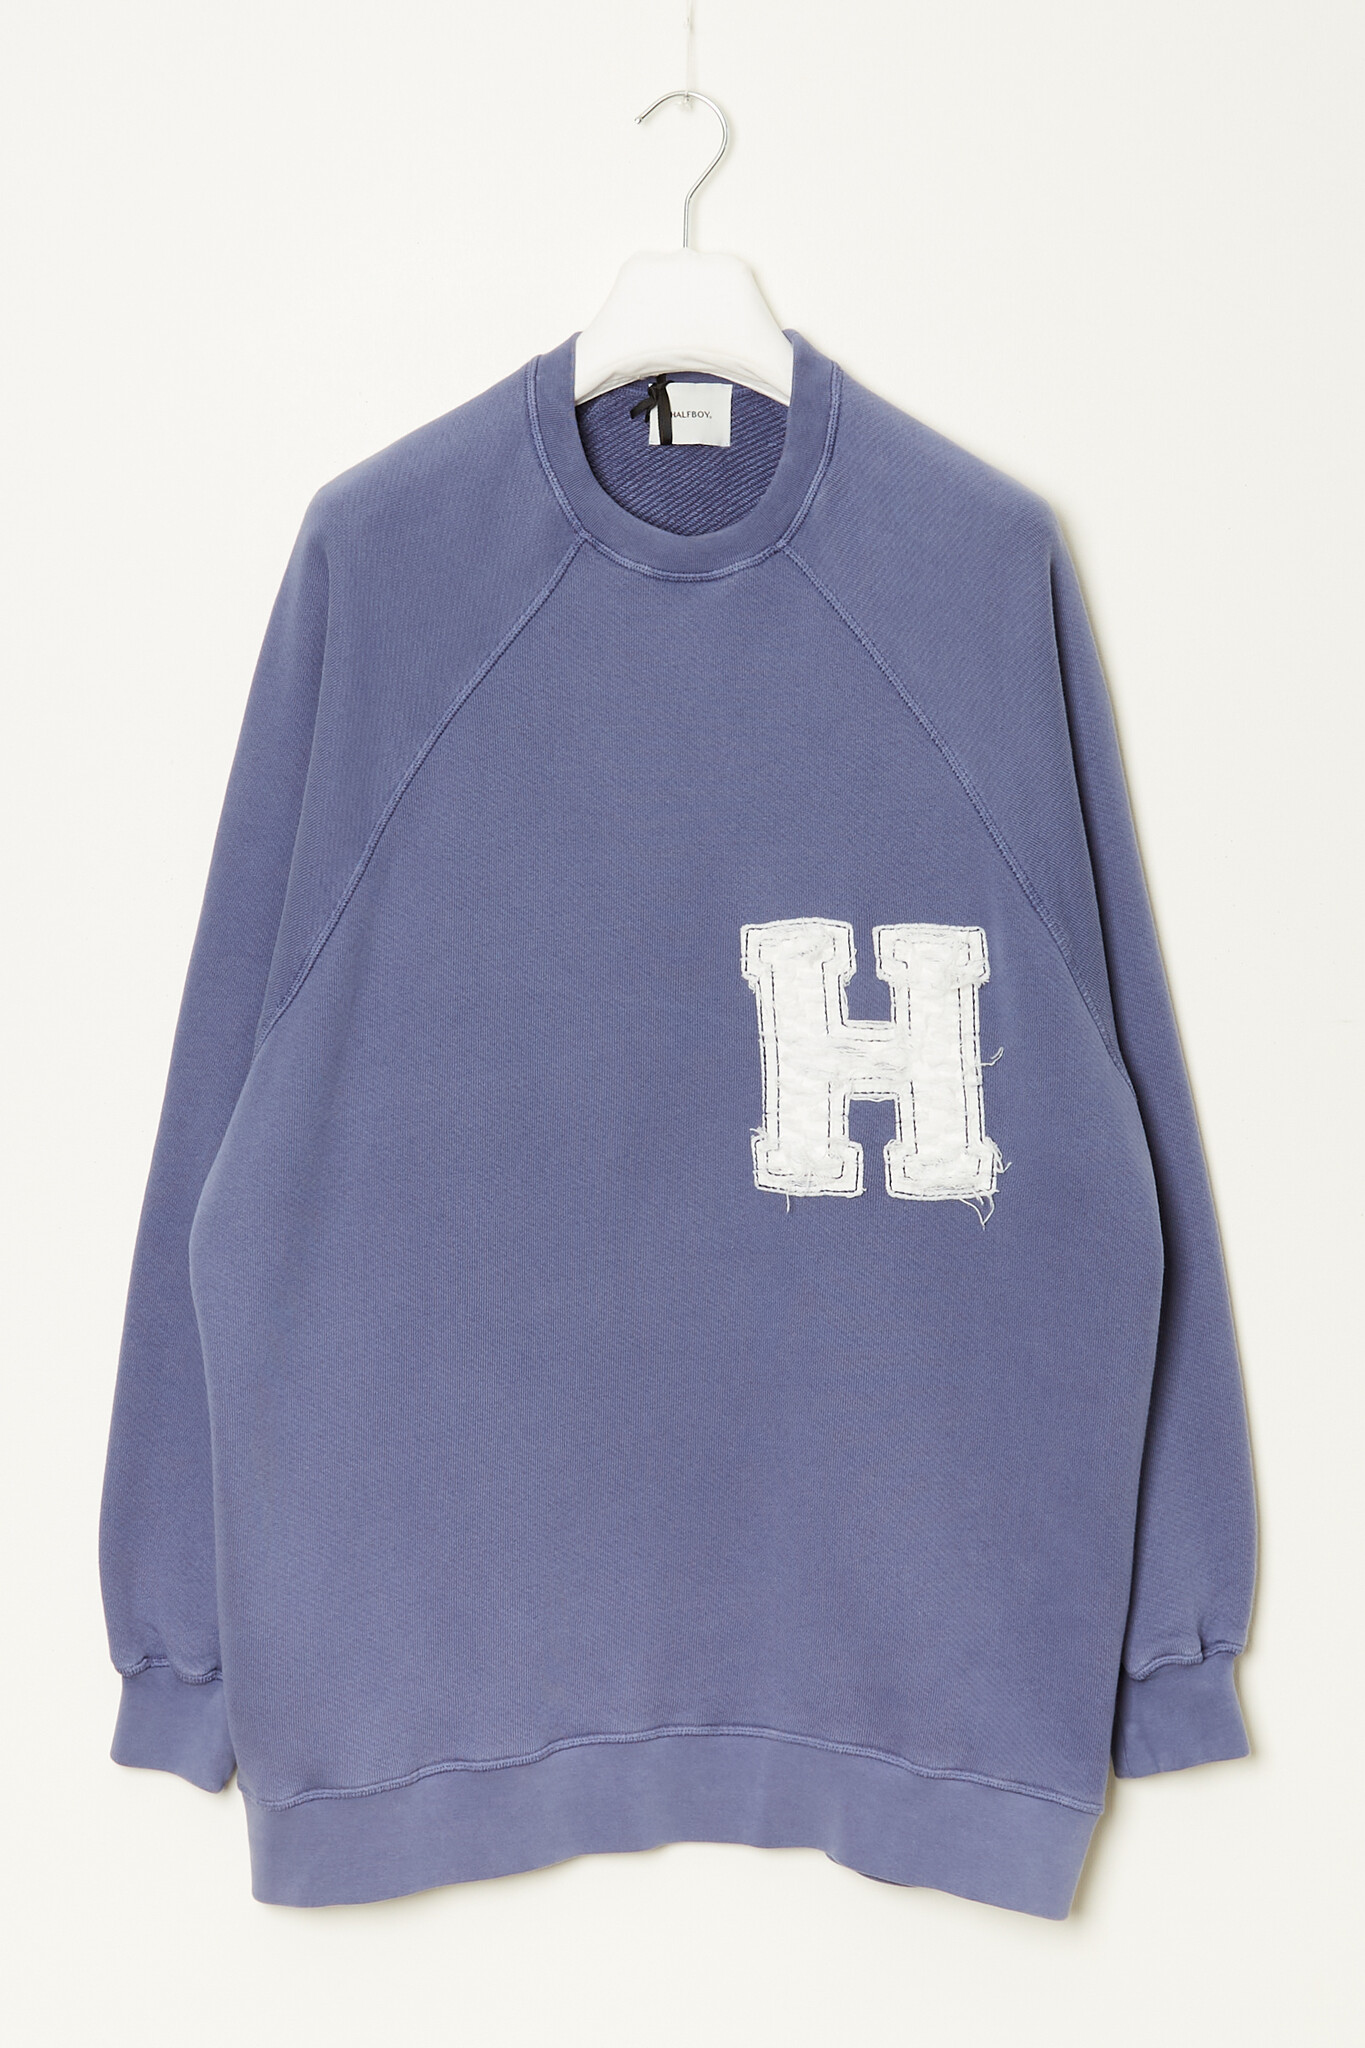 Halfboy - Crew neck sweatshirt